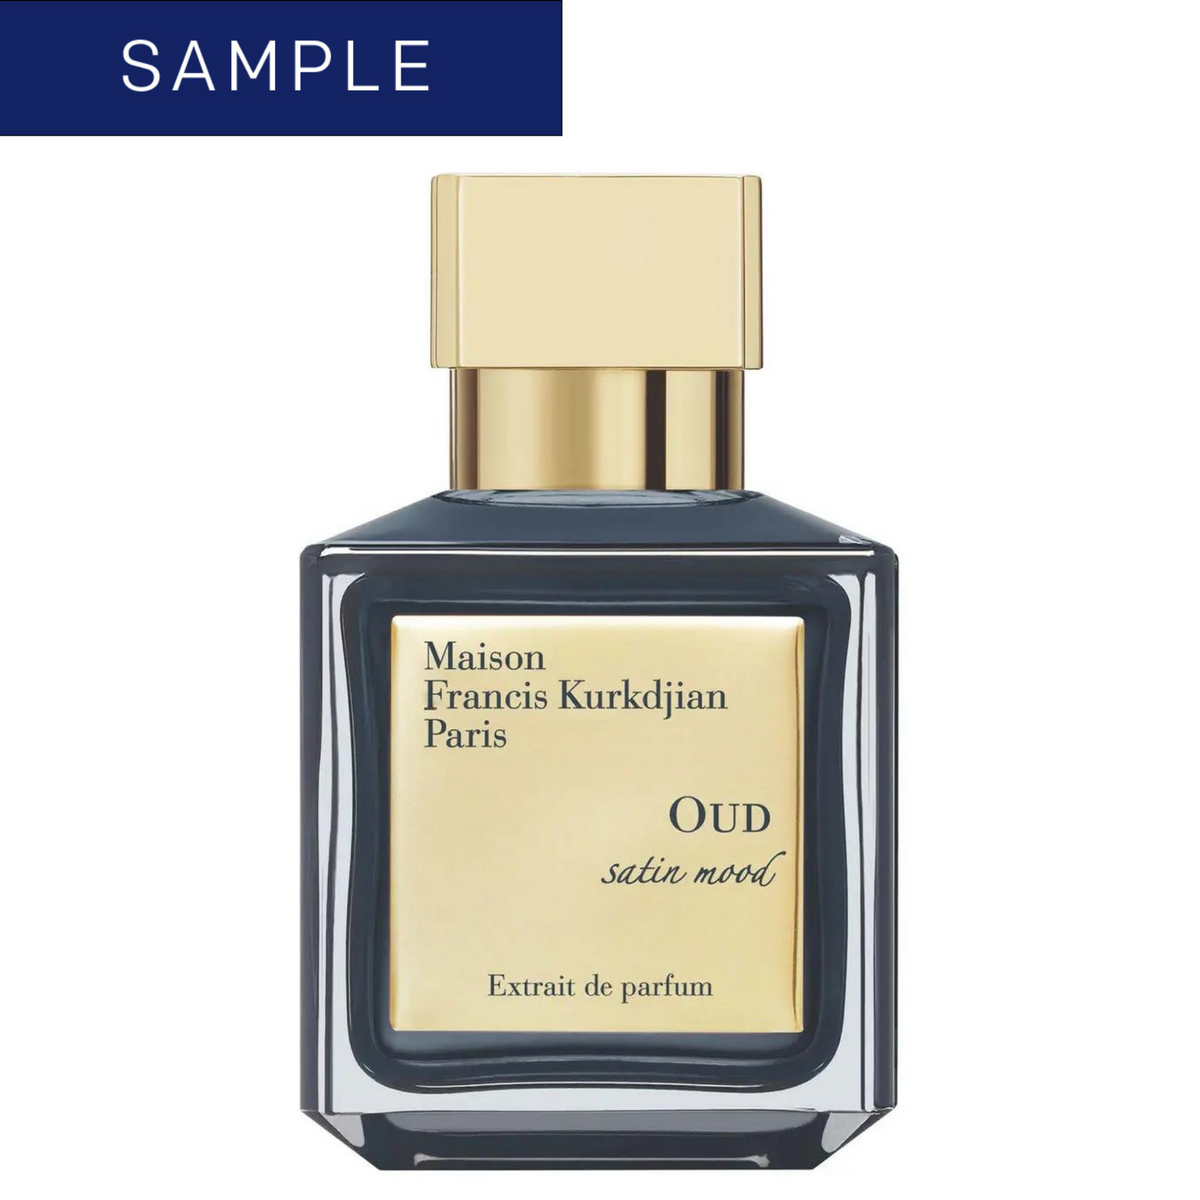 Primary image of Sample - Oud Satin Mood Extrait de Parfum